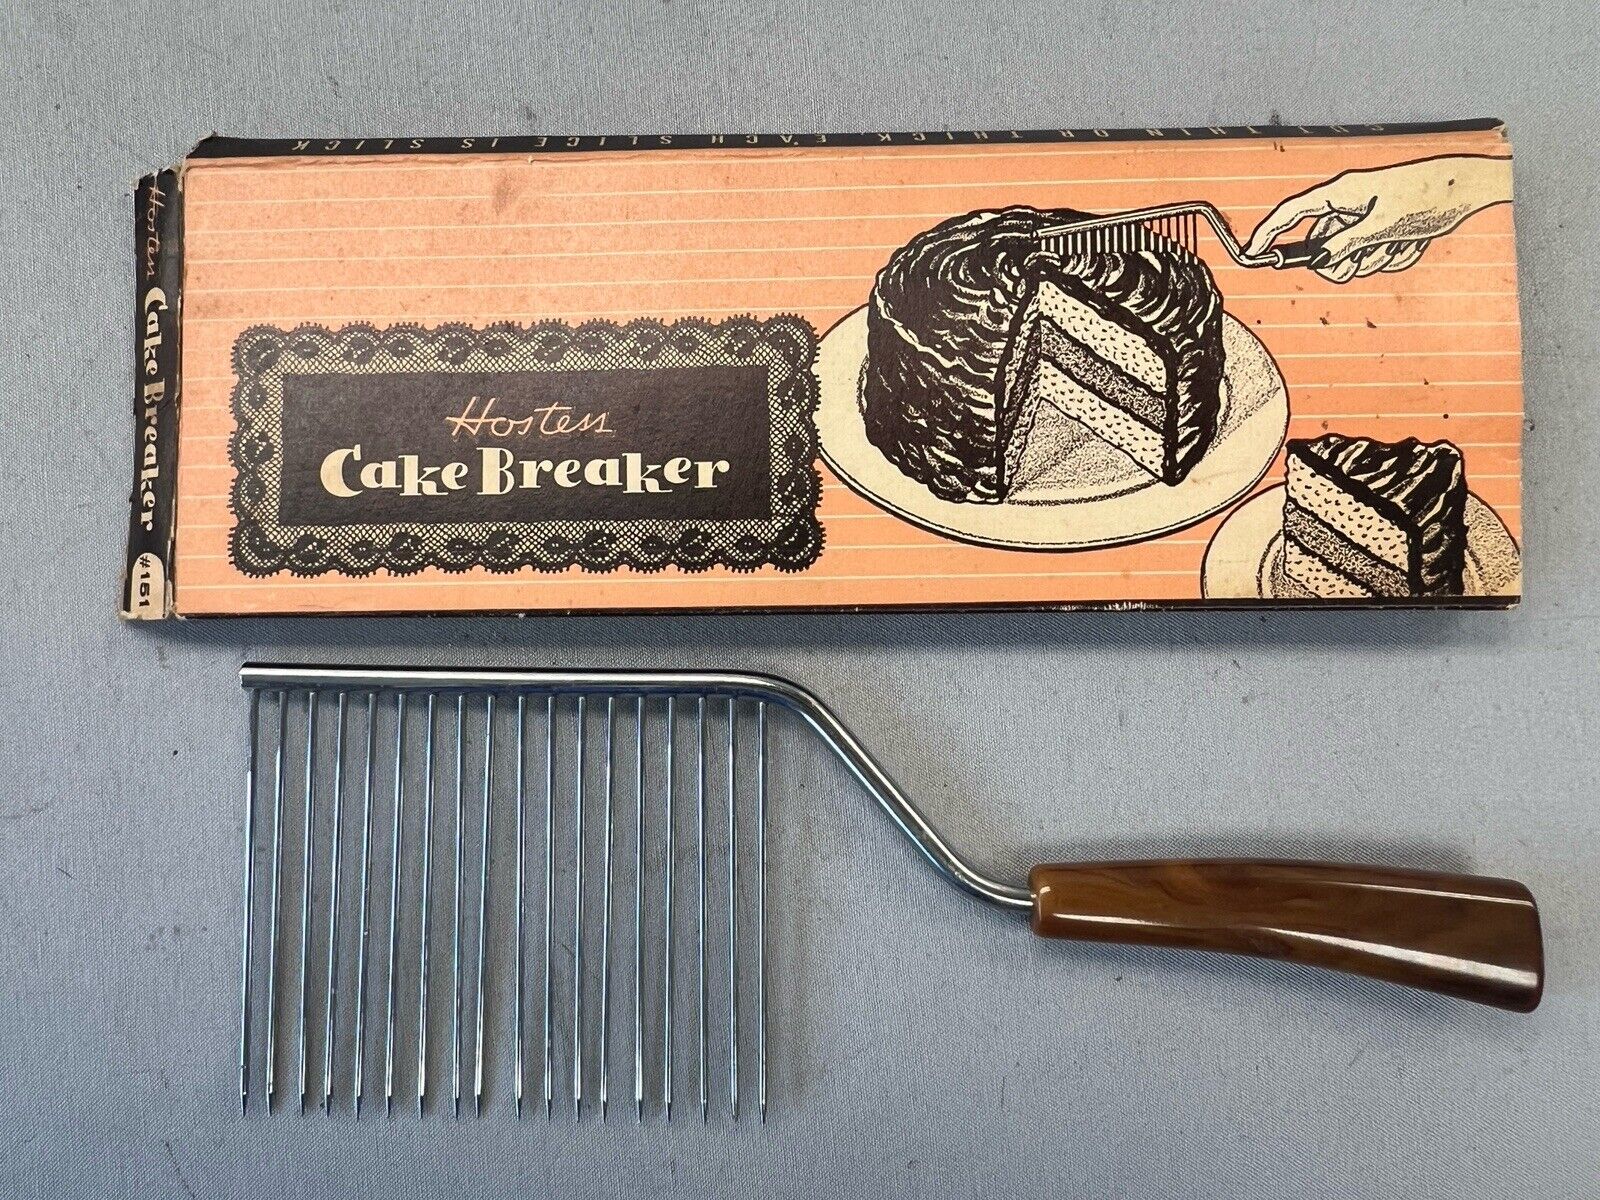 Vintage 1950s Hostess Cake Breaker Cutter Server in Original Box Bakelite Handle